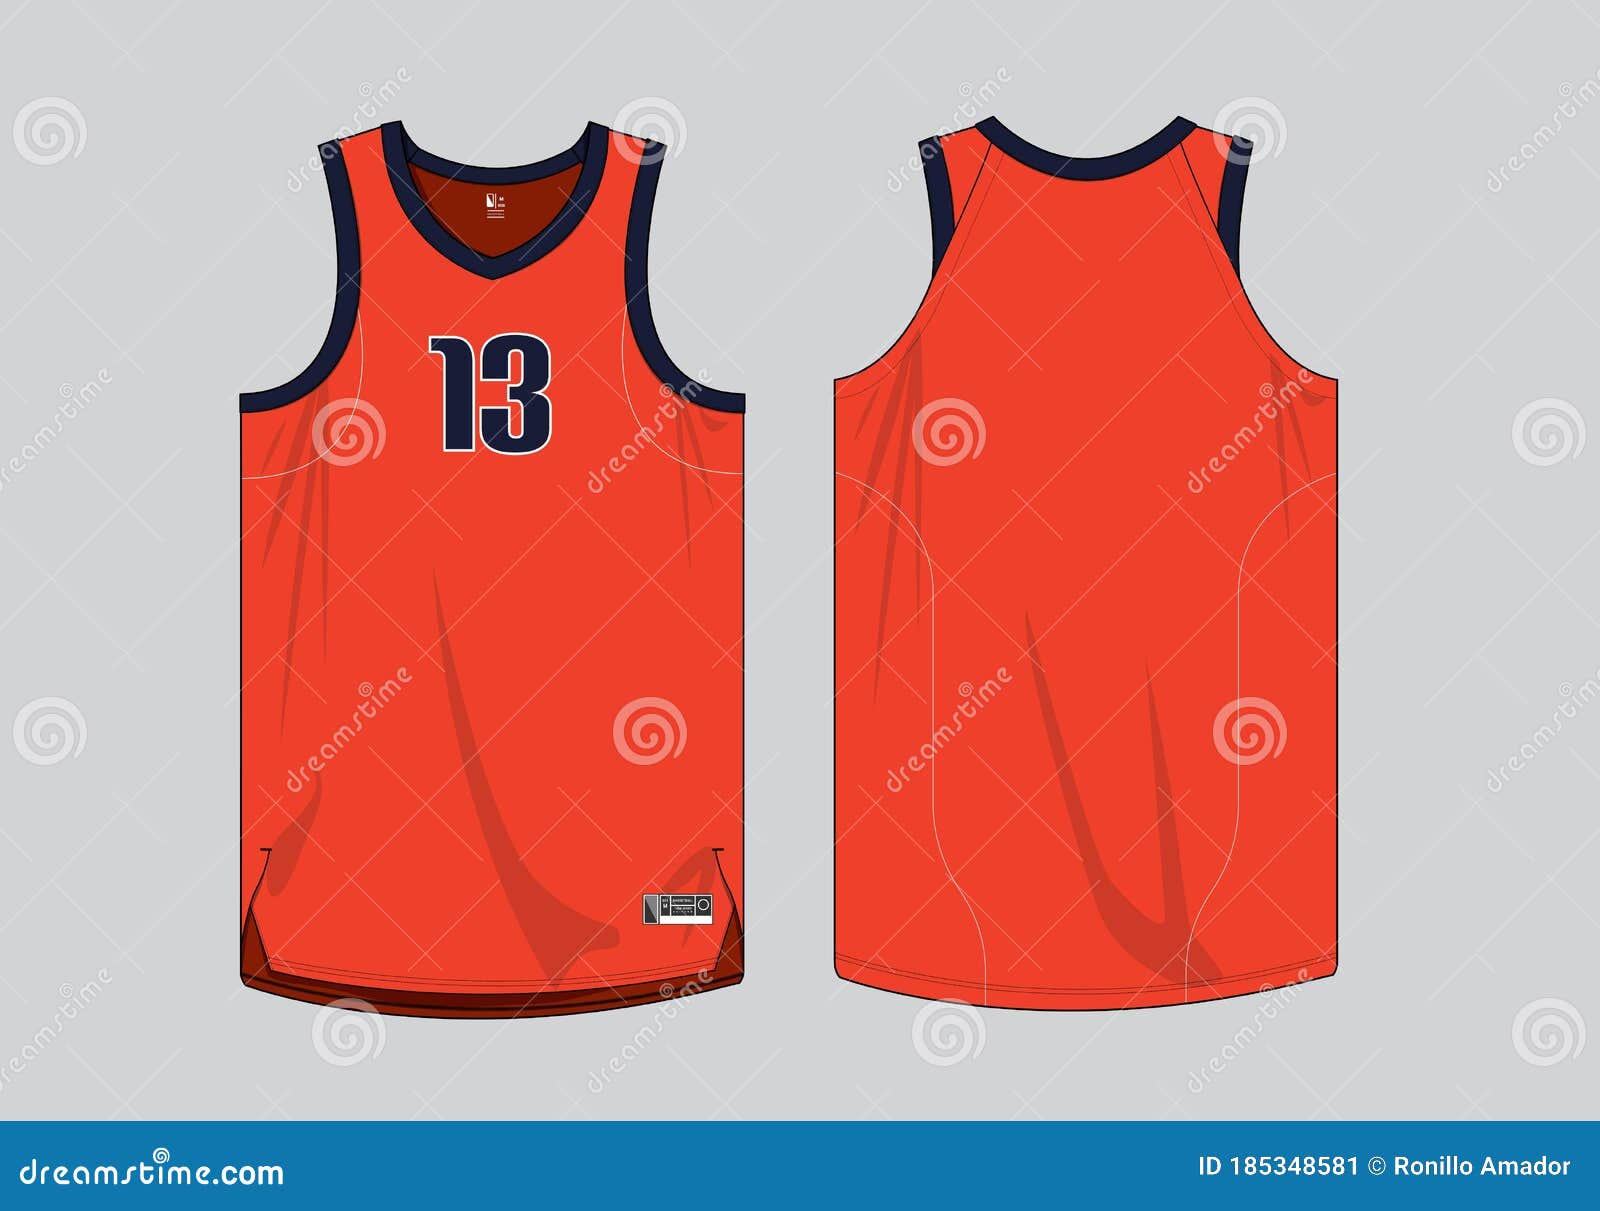 Download Basketball Jersey Uniform Player Sports Team Apparel Stock ...